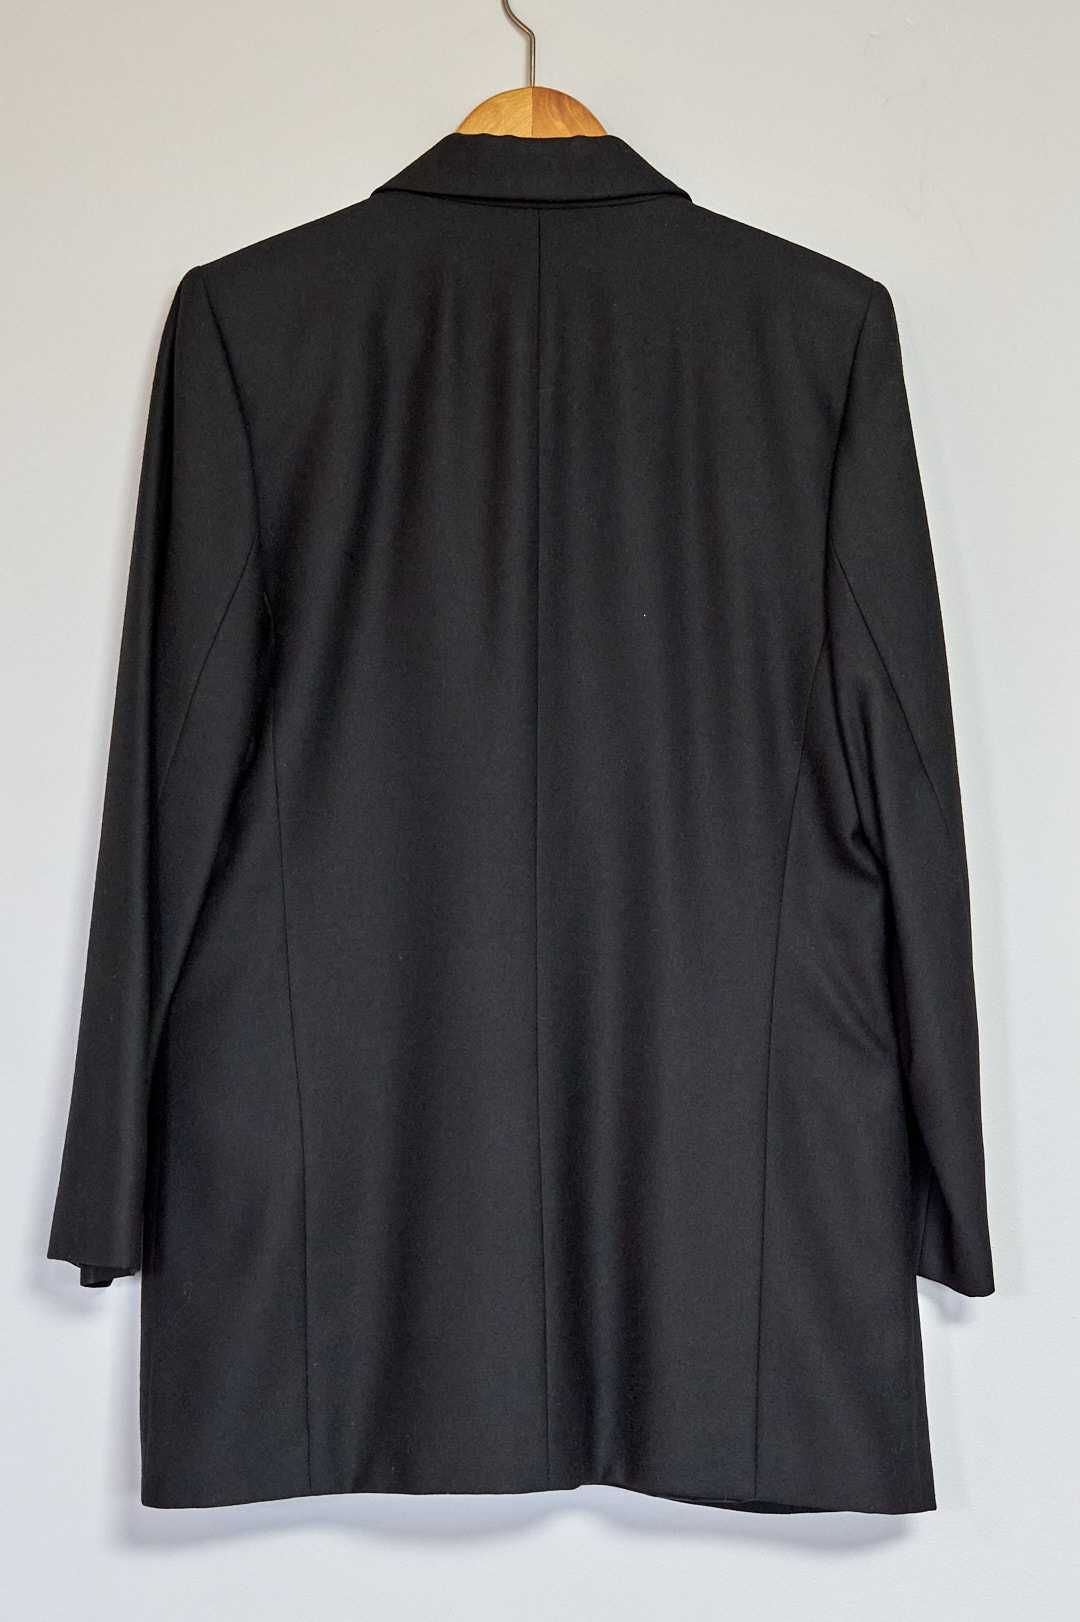 Marynarka damska czarna R.38 + (bluzka, szt. biżuteria, rajsto) GRATIS